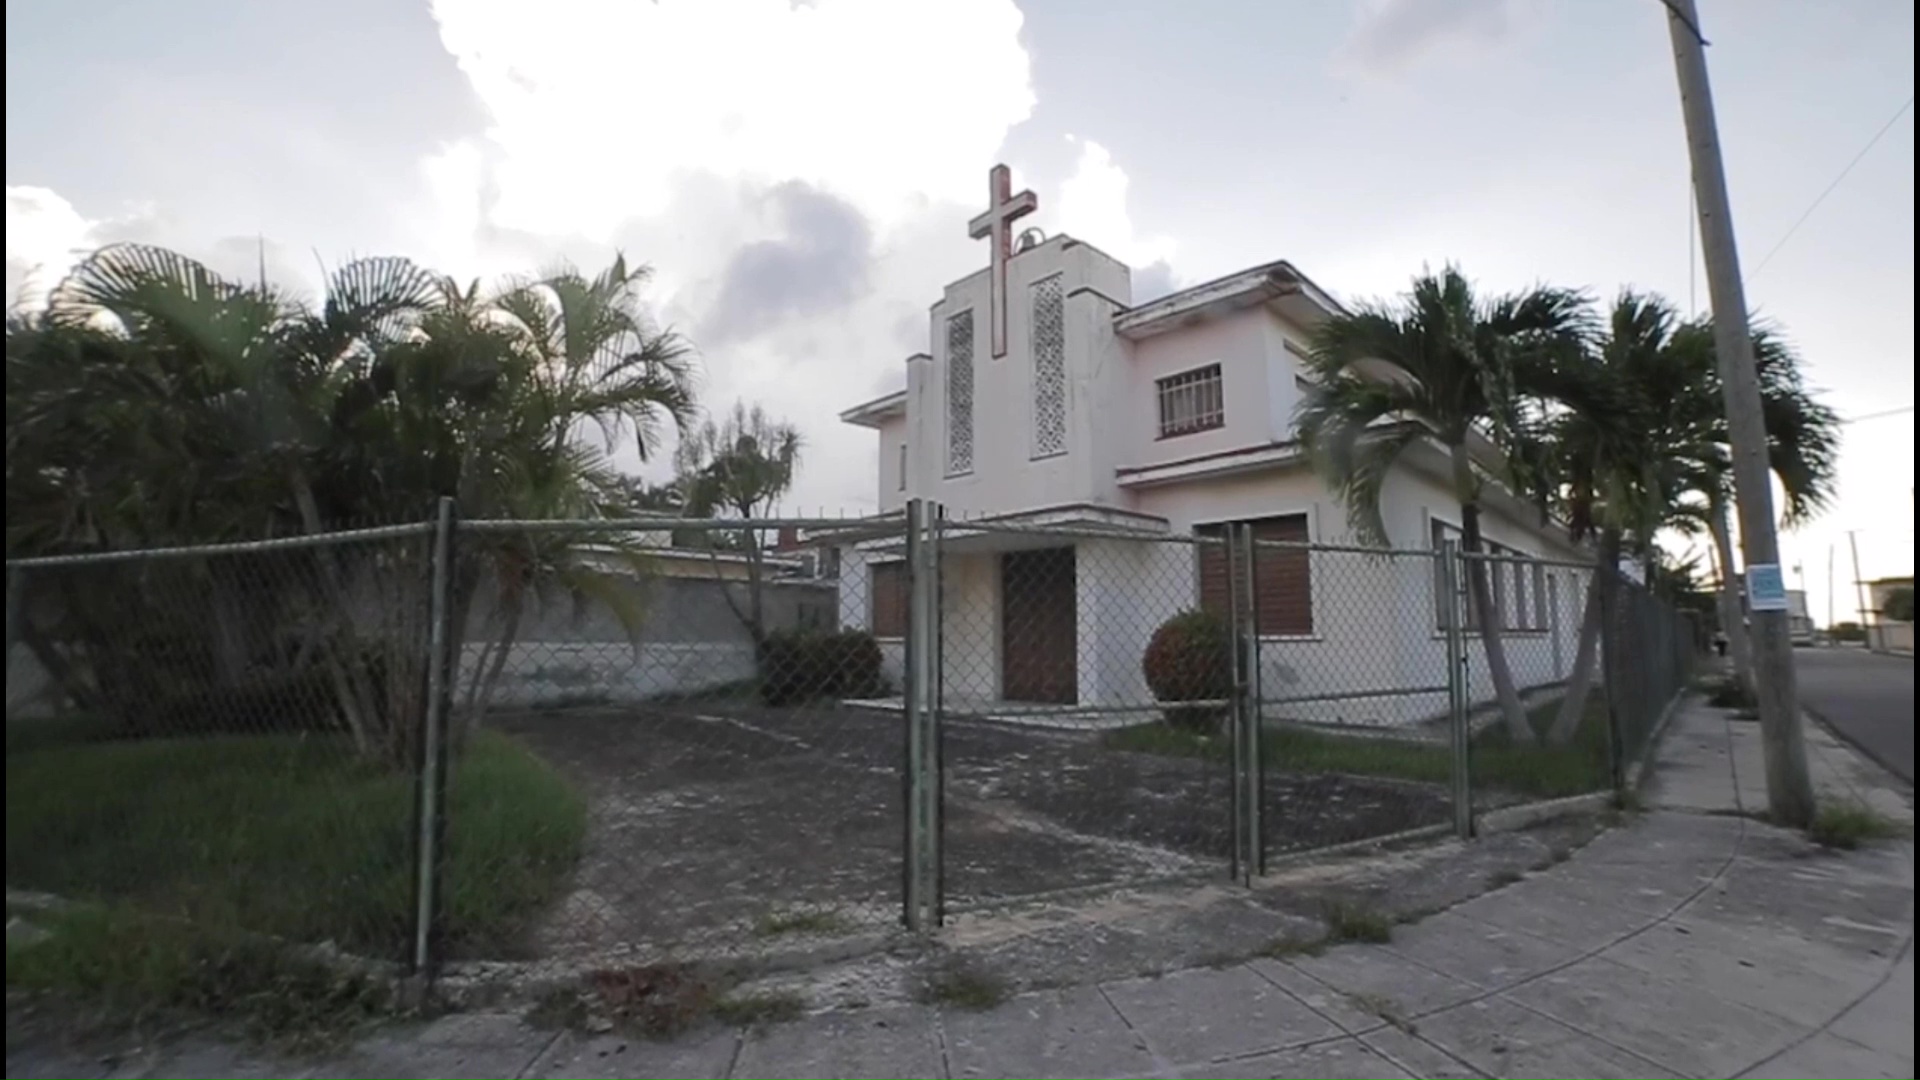 Documental desvela la realidad de la libertad religiosa en Cuba